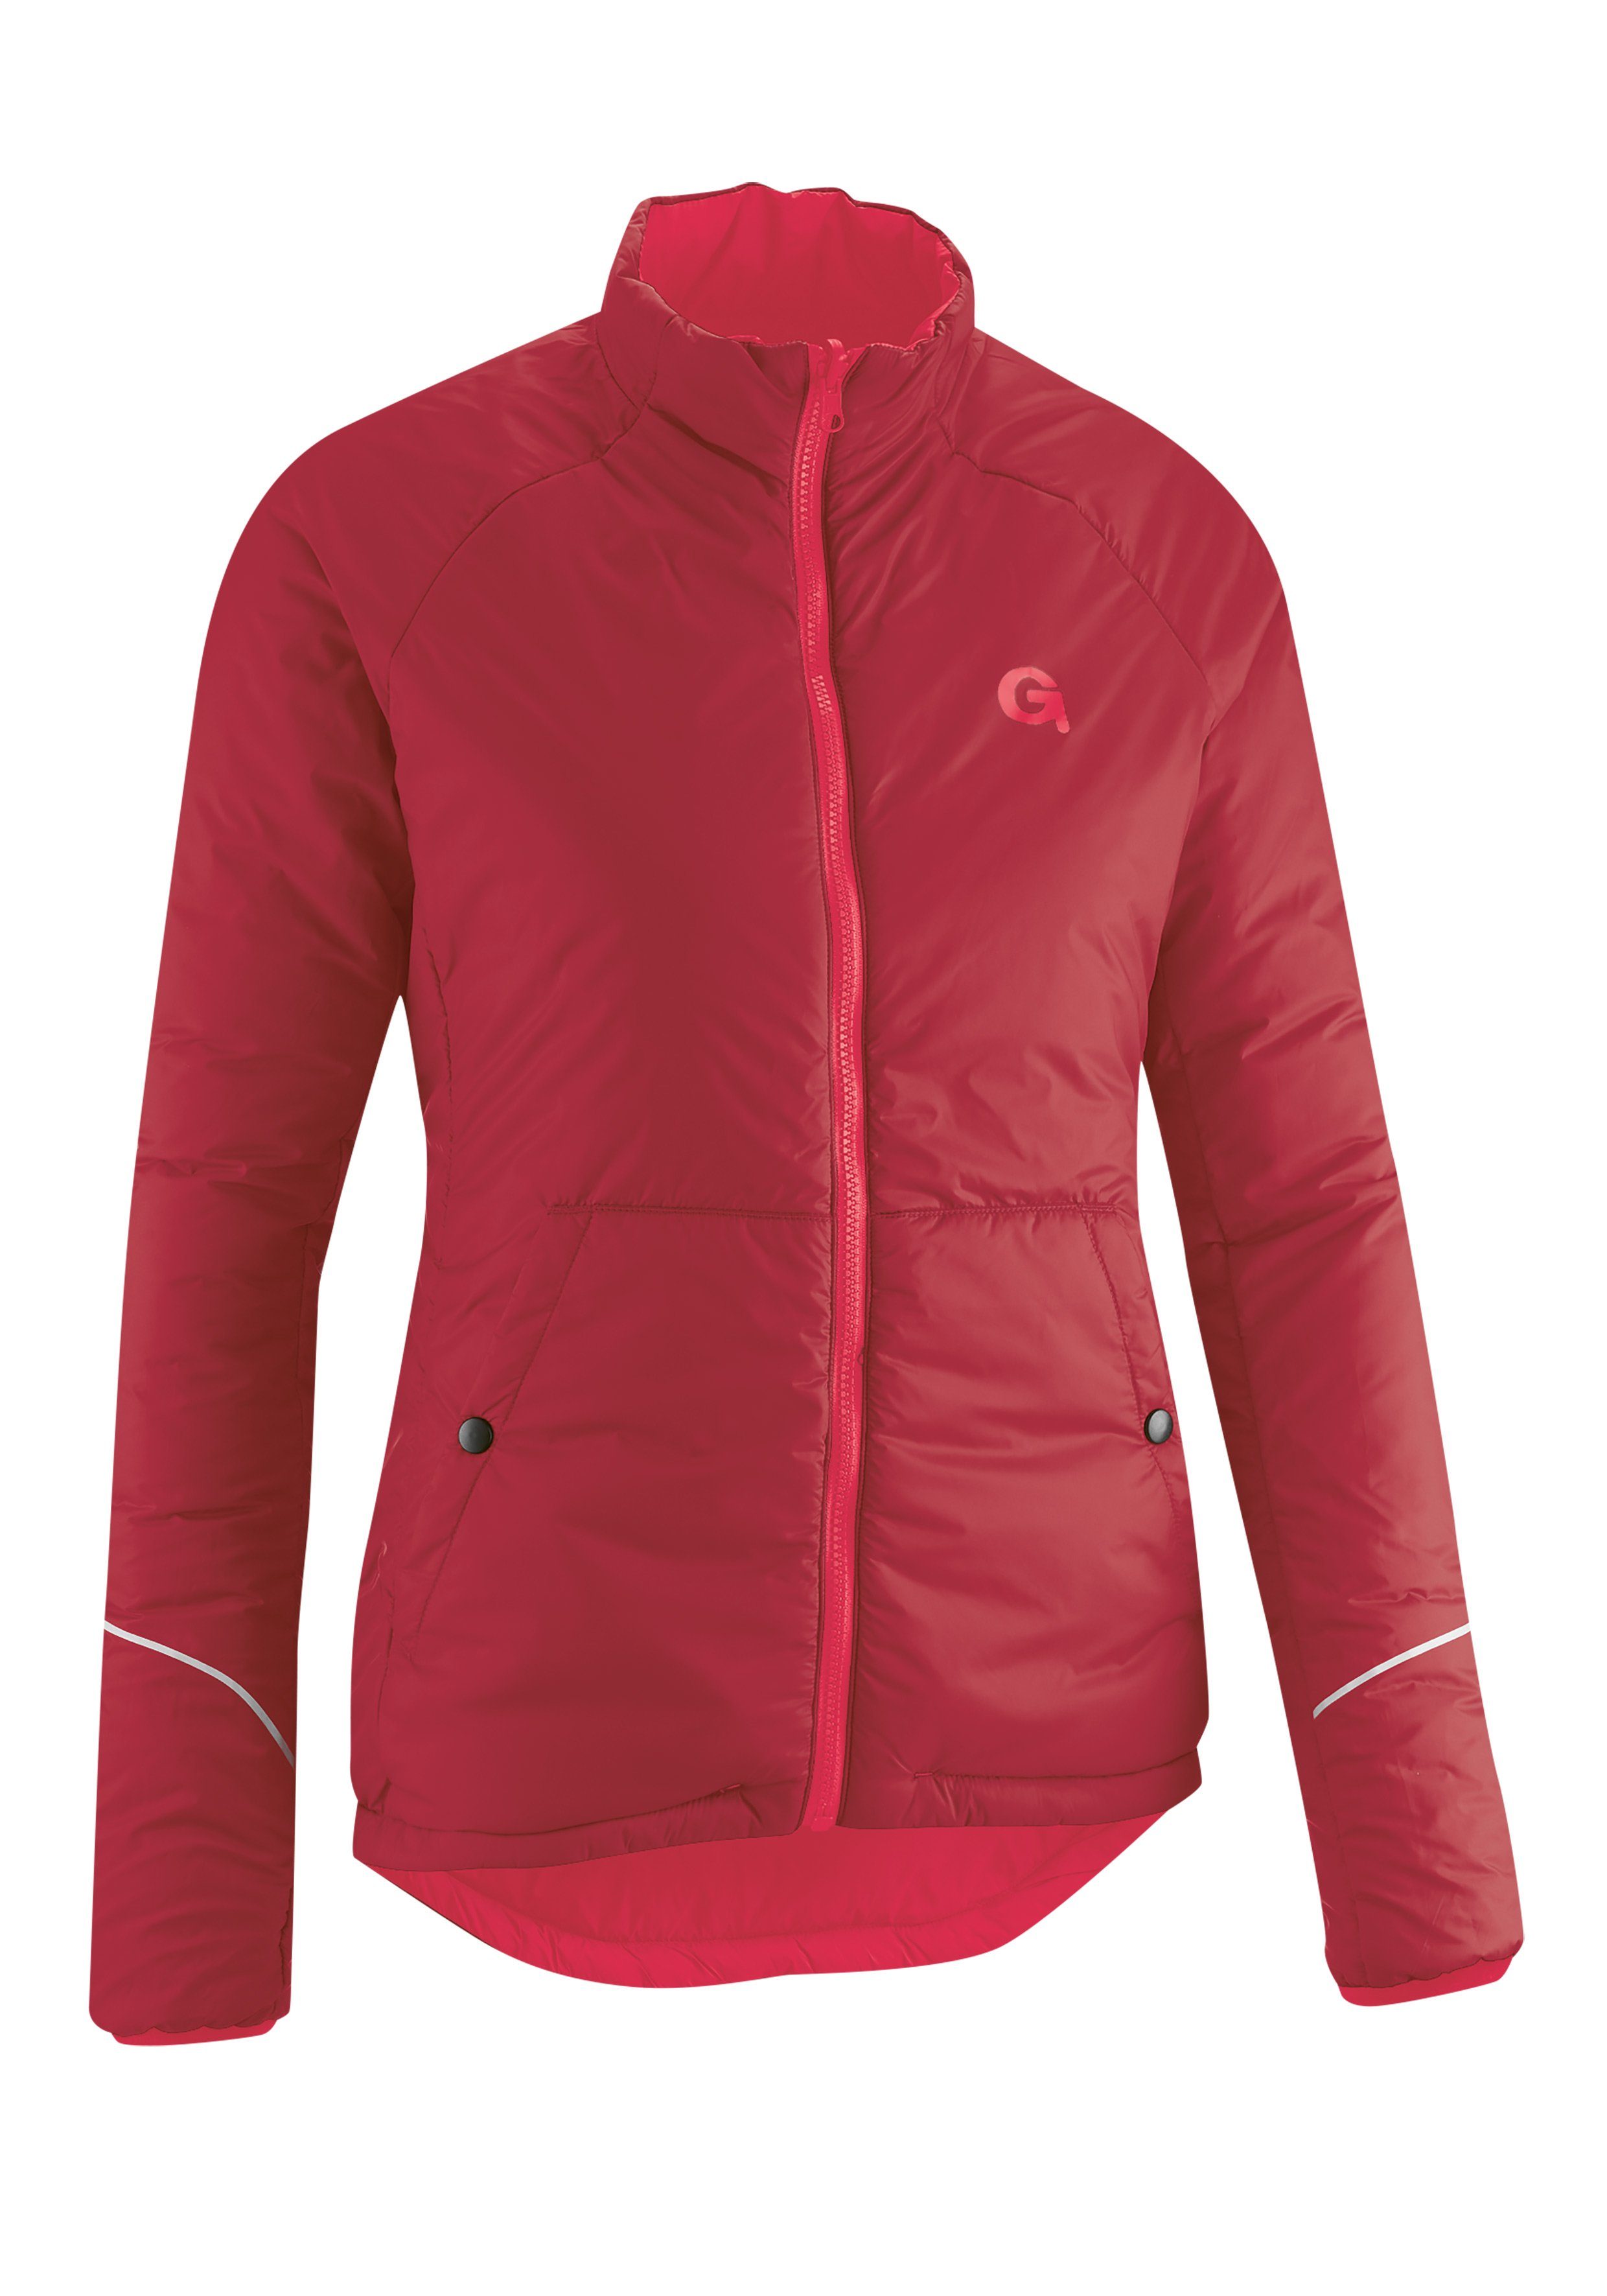 neonpink Primaloft-Jacke, Wendejacke warme Damen SORIO Gonso Fahrradjacke und atmungsaktive